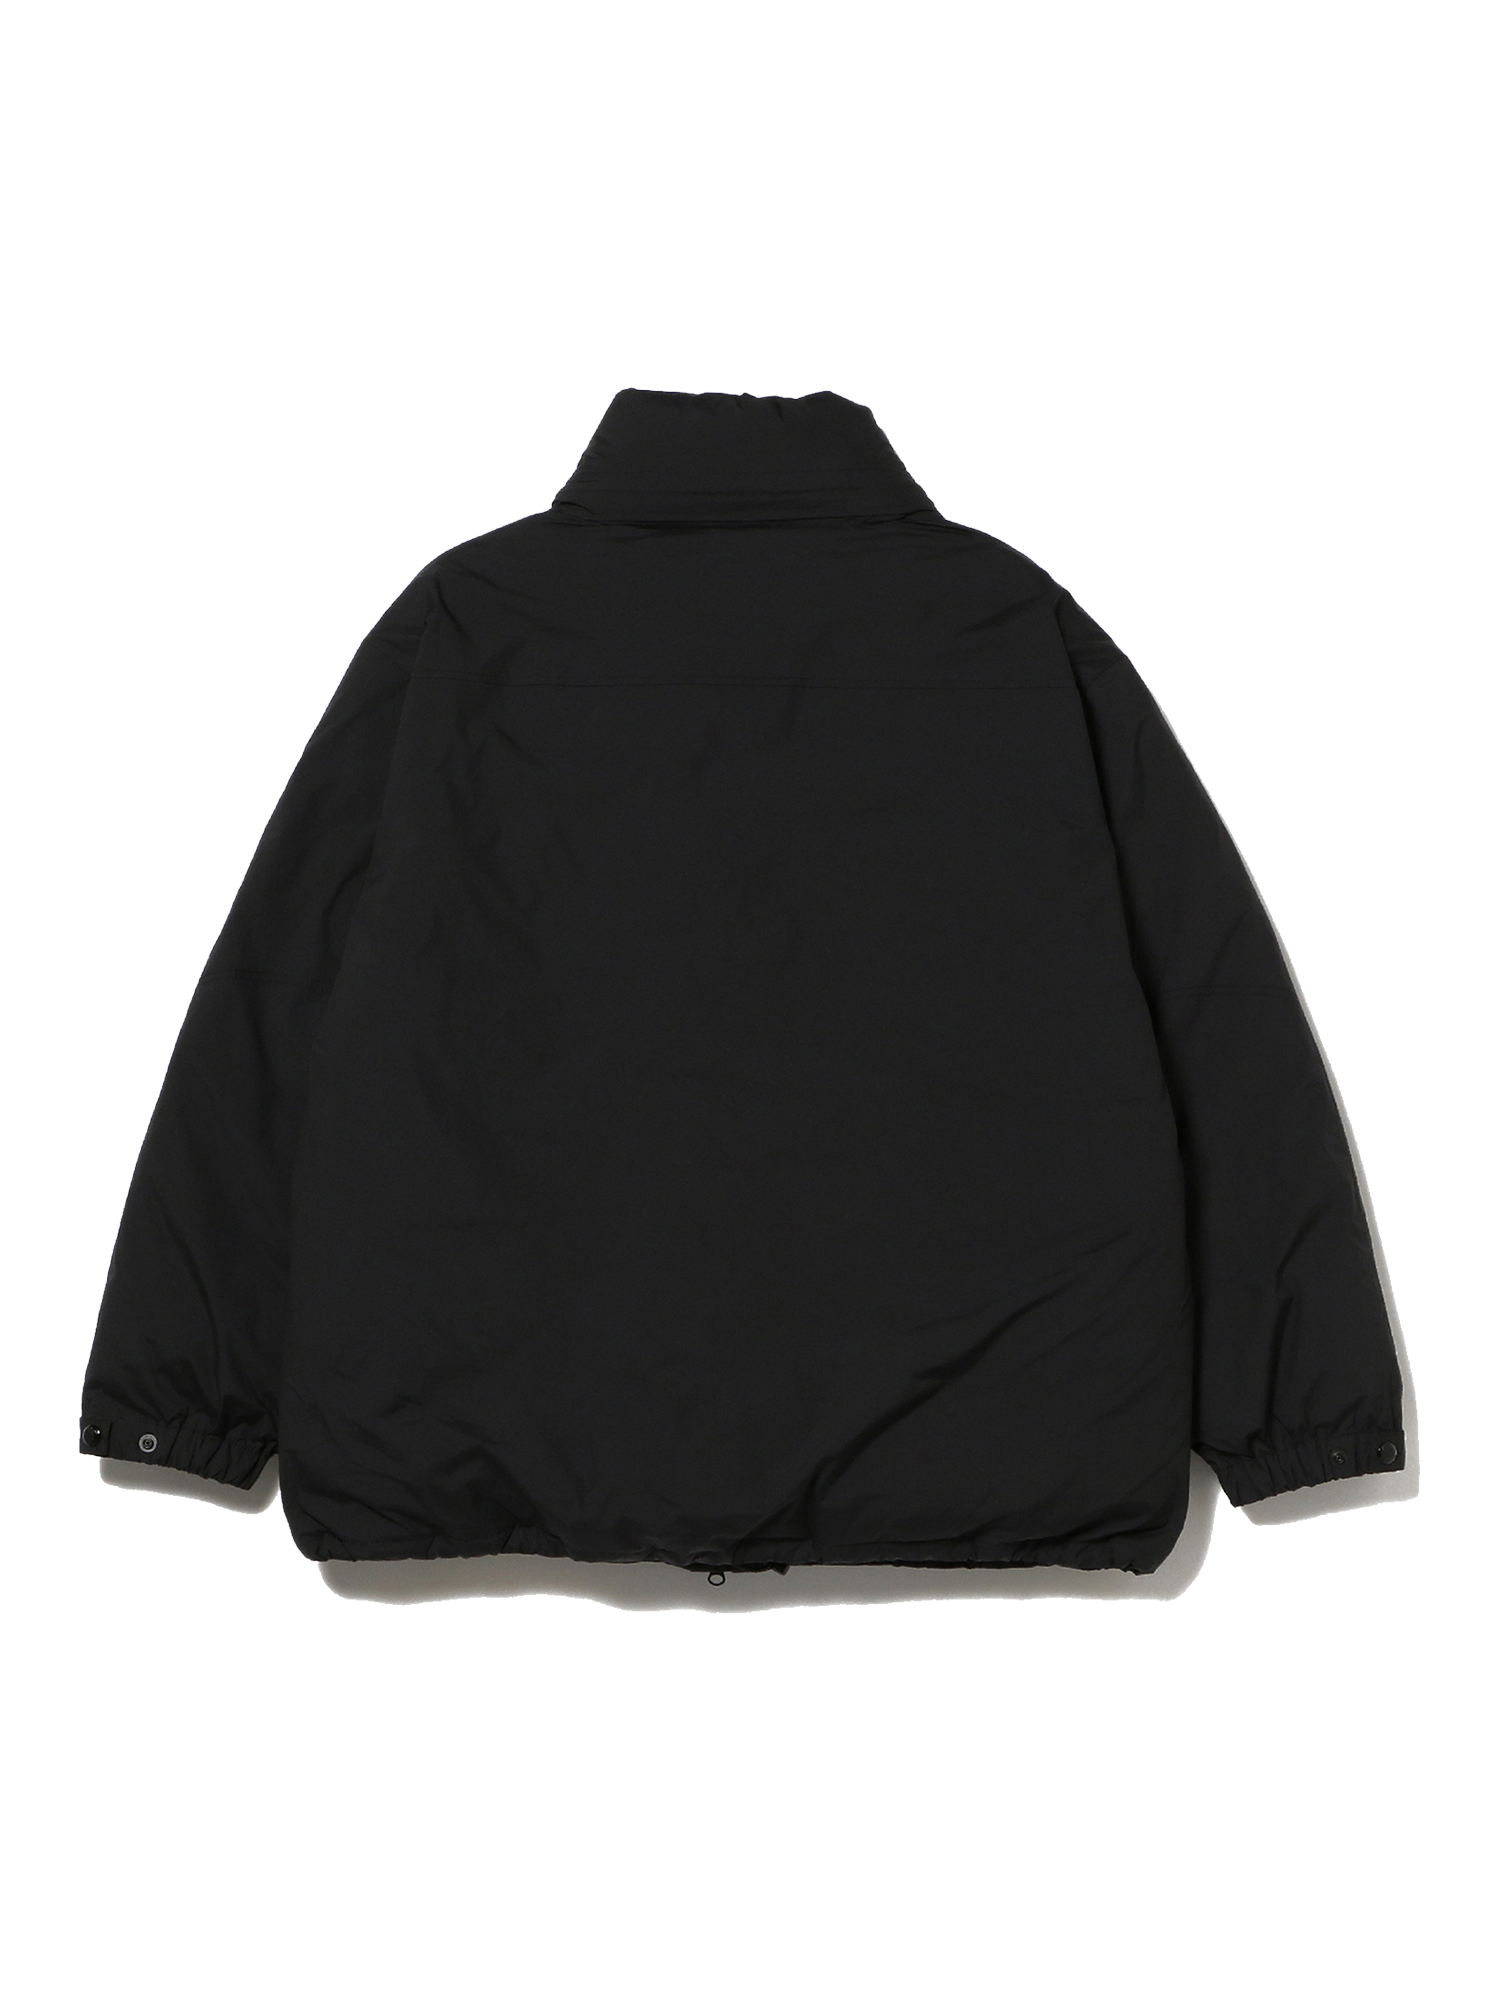 Pilgrim Surf + Supply - Jacket - Reinhold - Hooded Down Jacket - Black